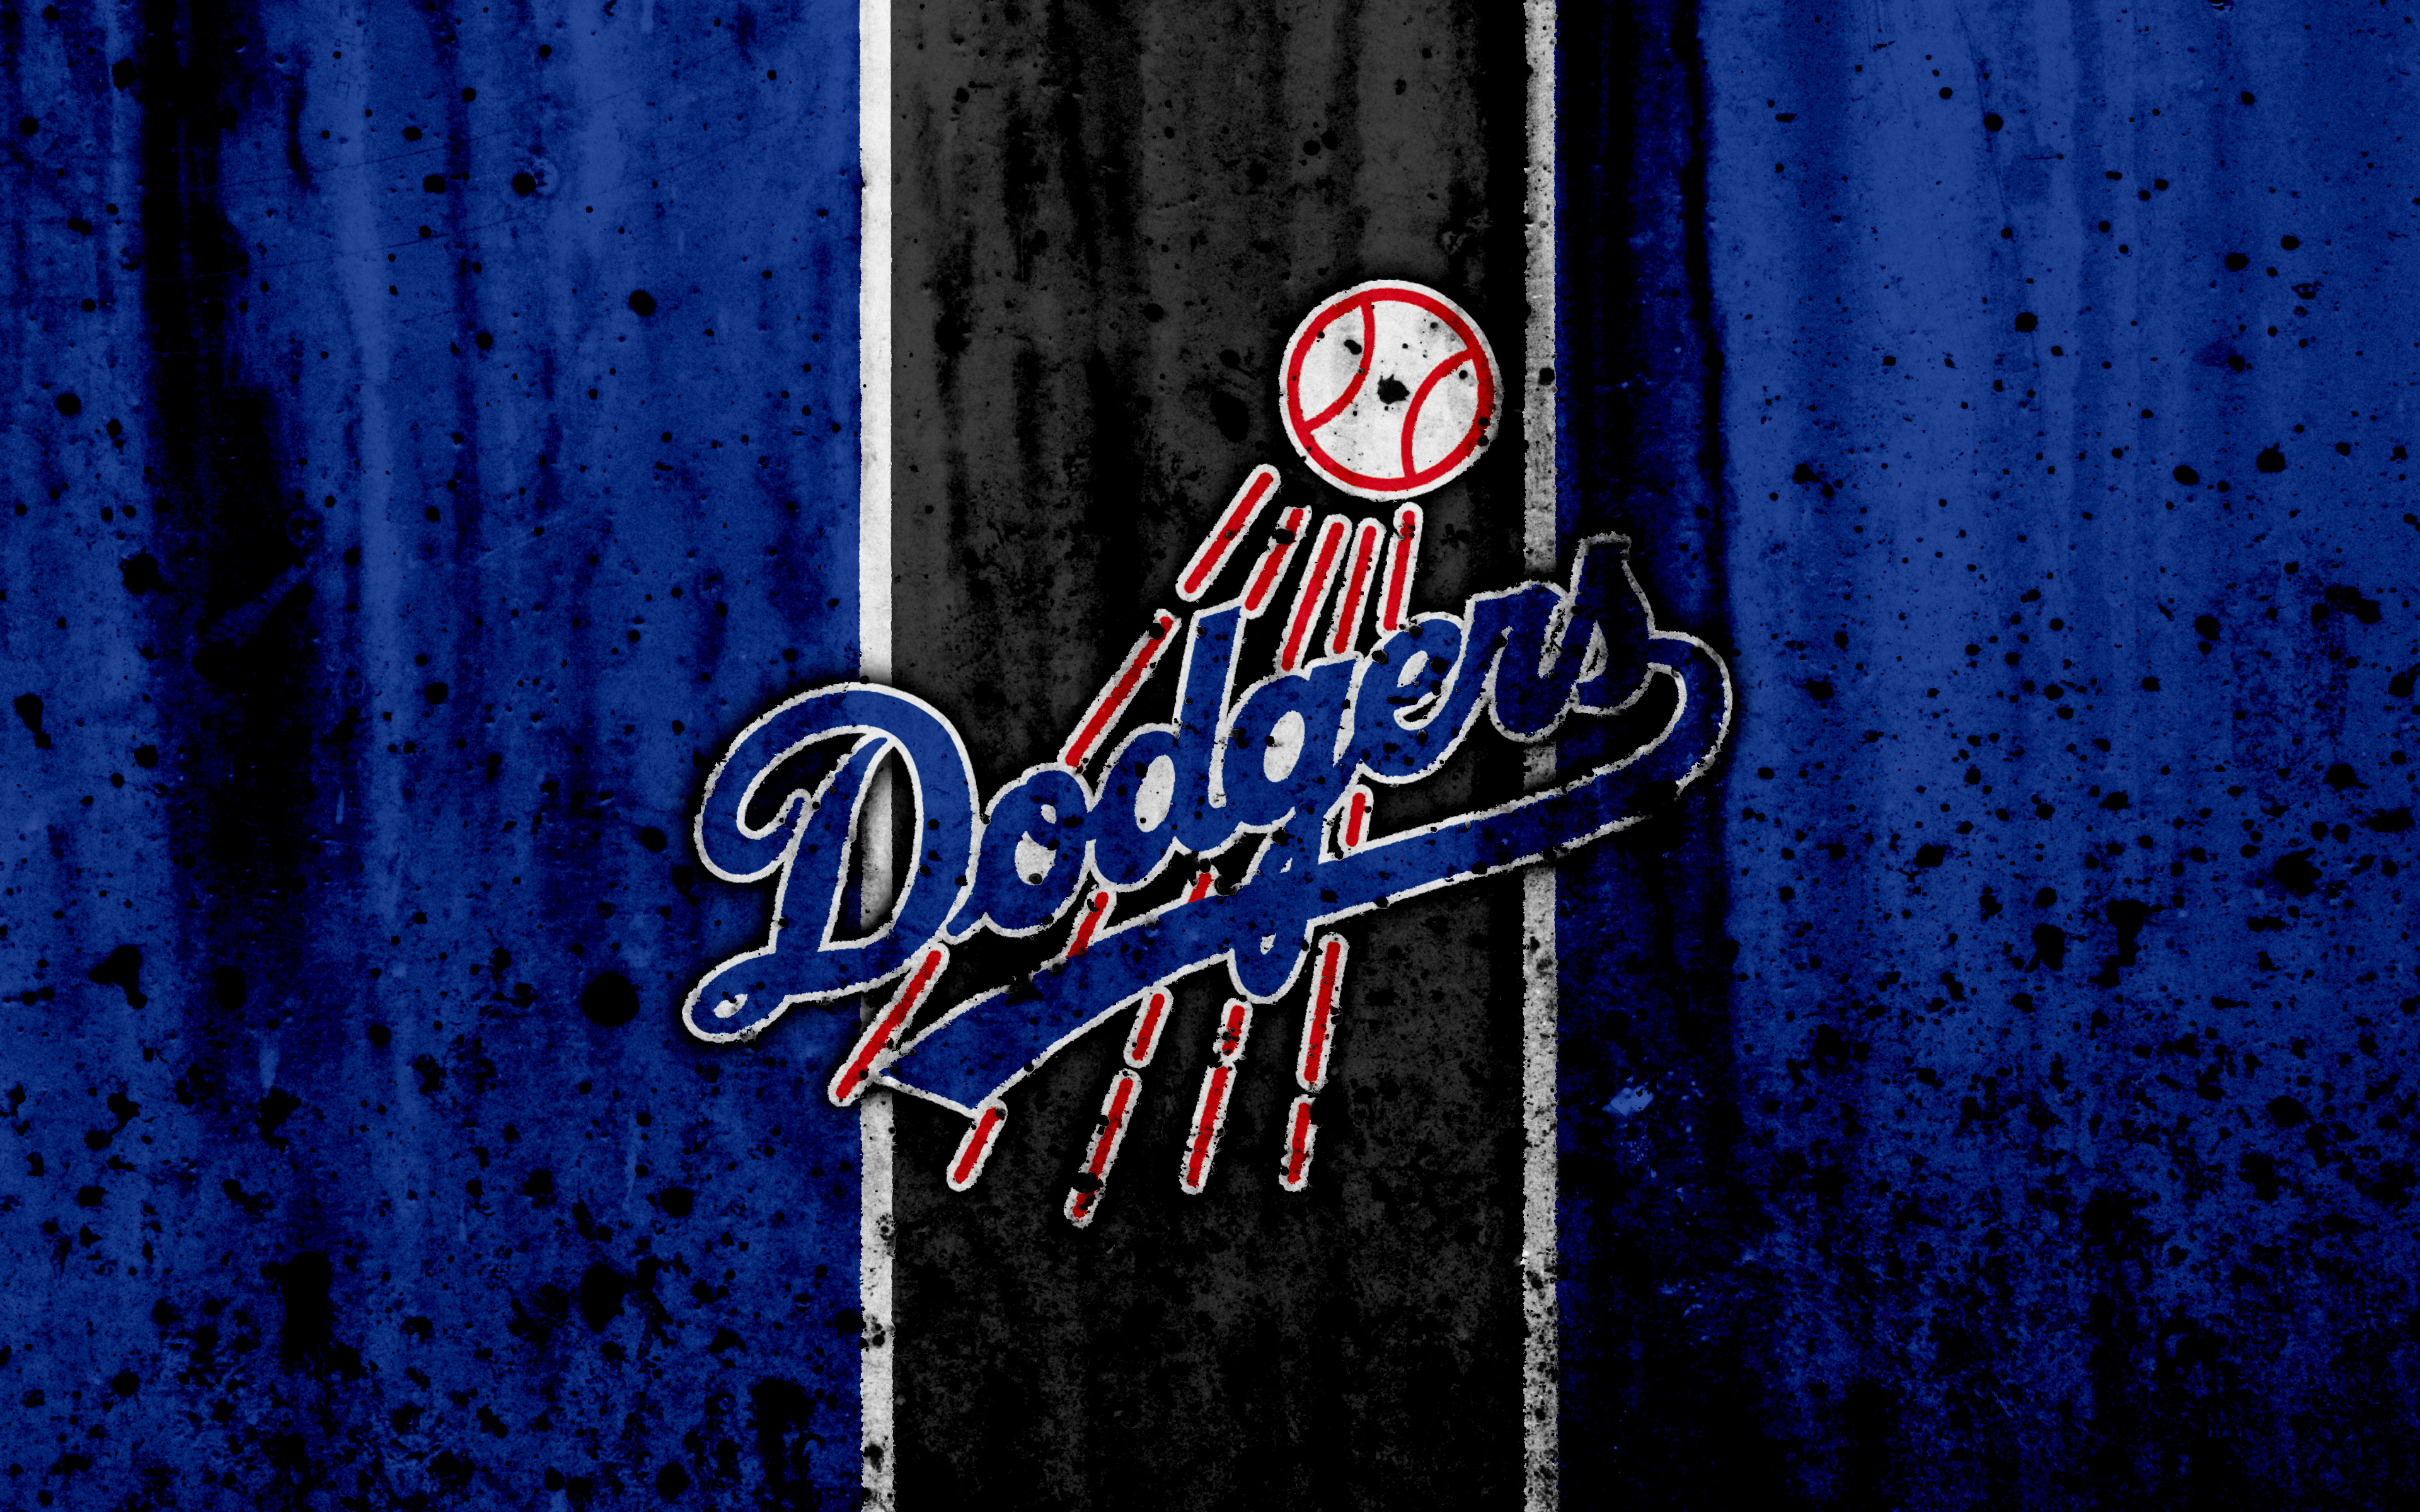 Free La Dodgers Wallpaper, La Dodgers Wallpaper Download - WallpaperUse - 1